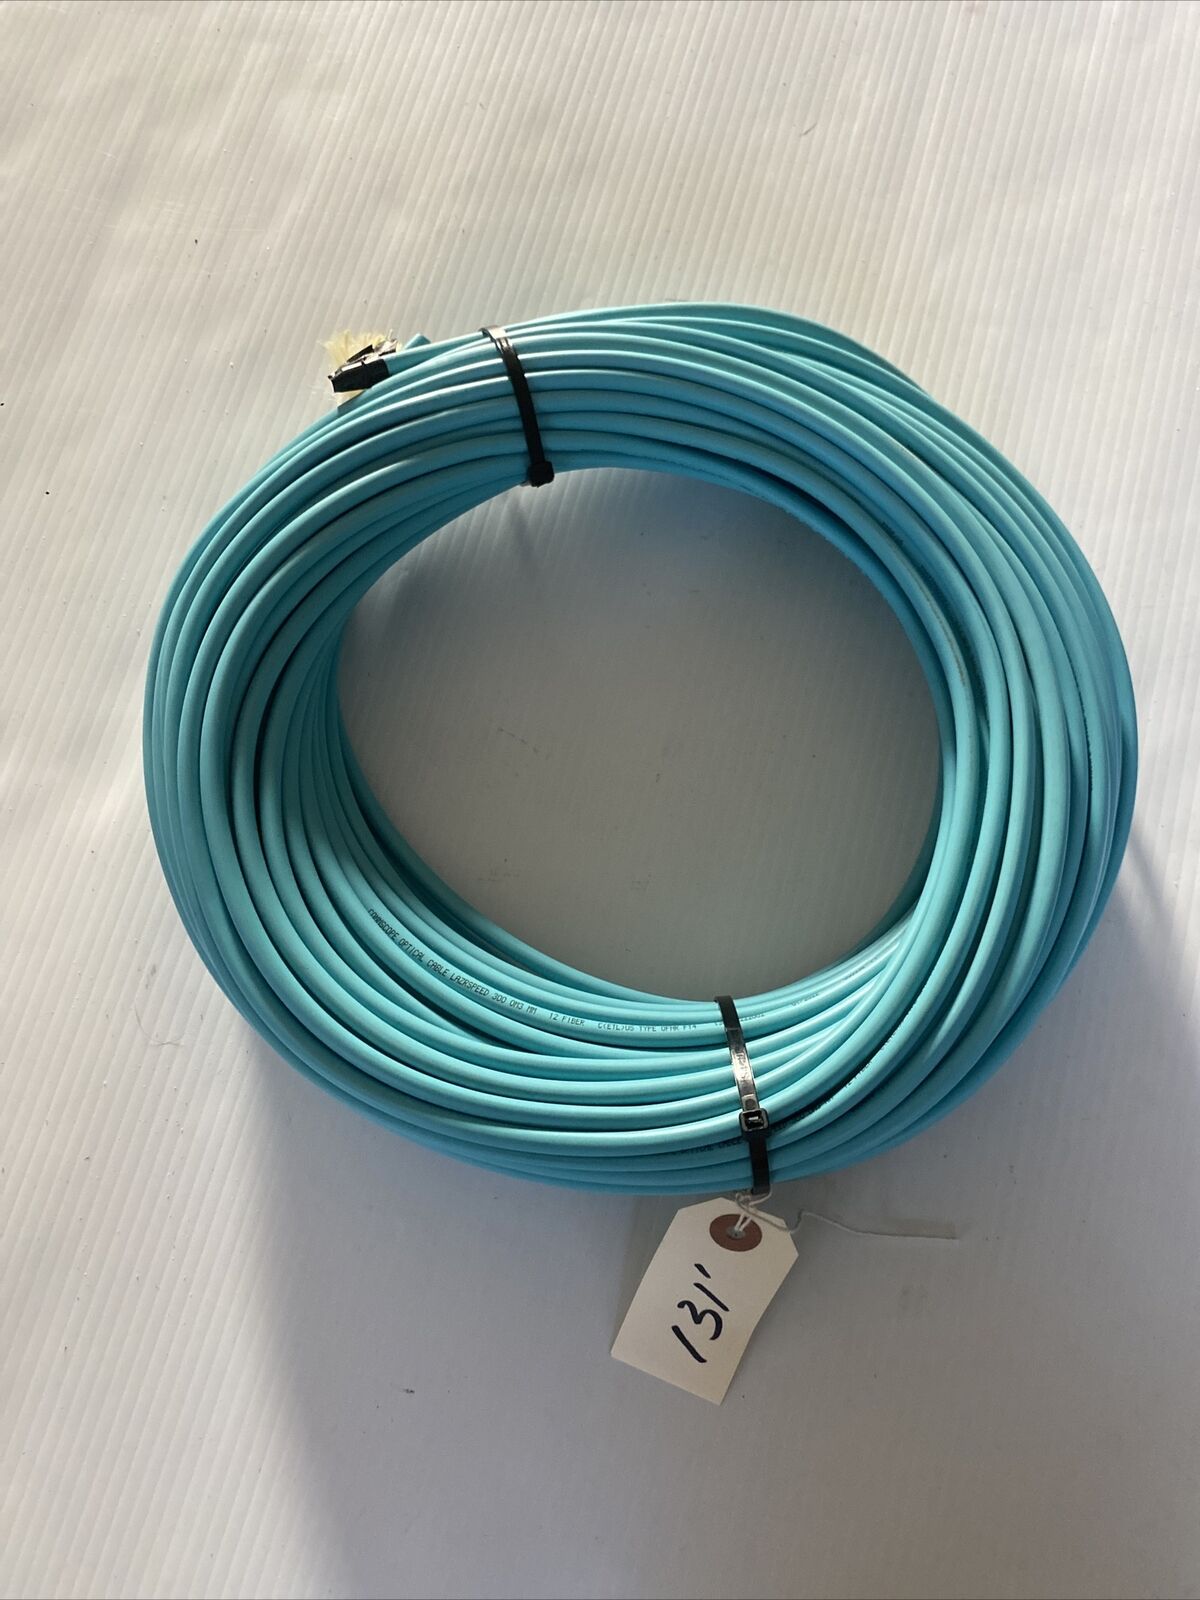 CommScope optical cable lazrSPEED 300 OM3 MM 12  Fiber C(ETL)US Type OFNR FT4